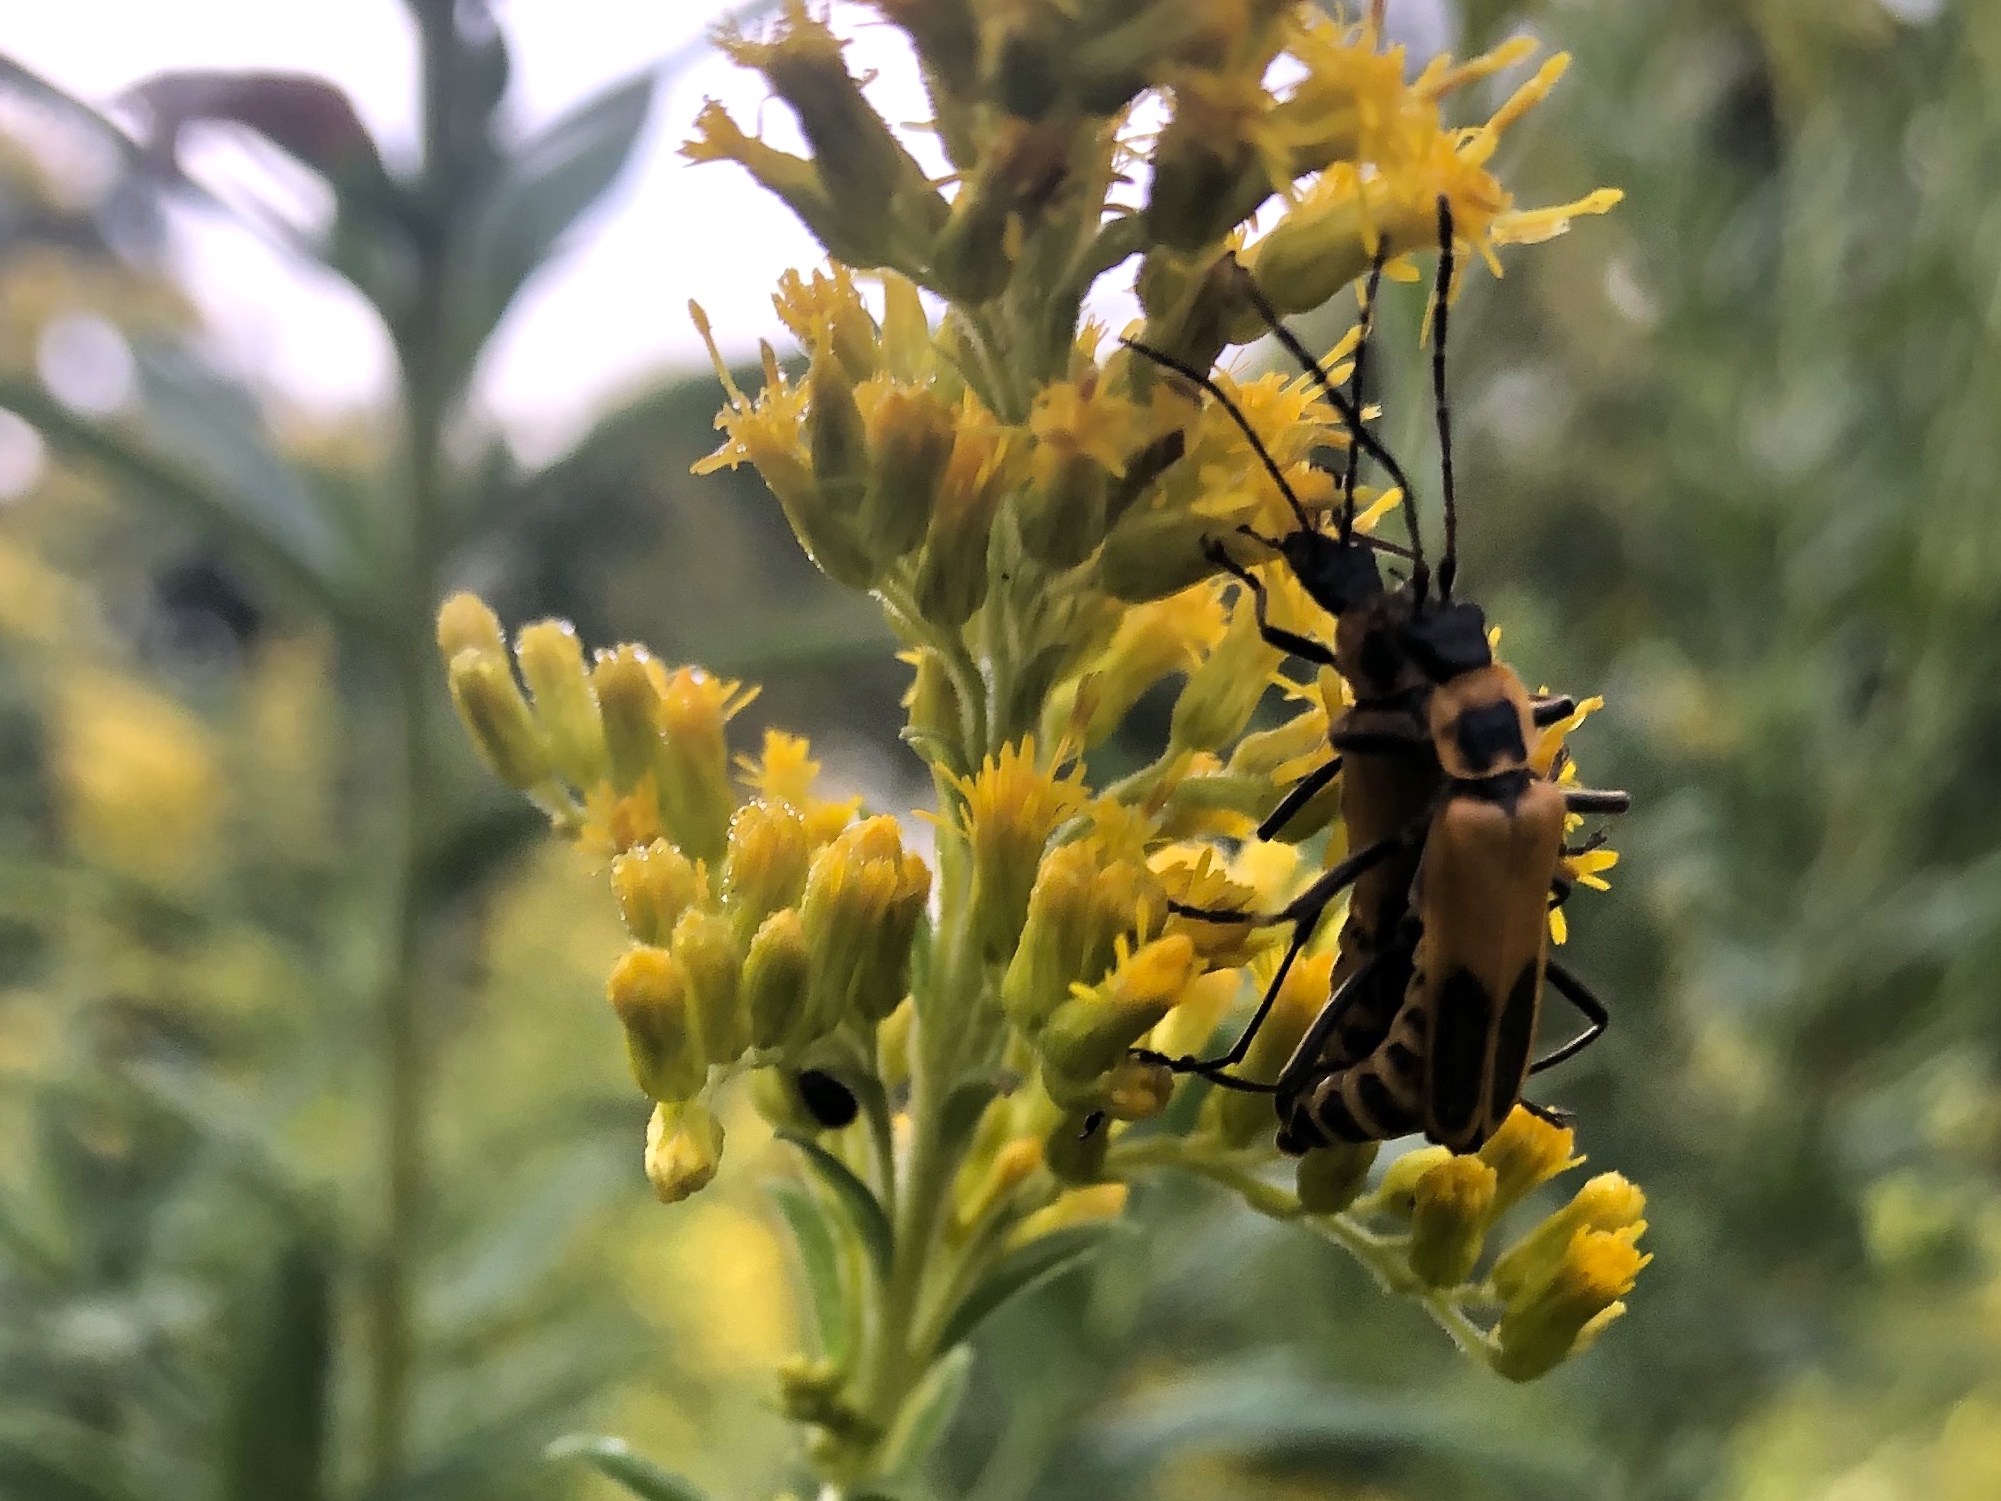 Goldenrod Soldier Beetles on Goldenrod in Oak Savanna on September 1, 2020